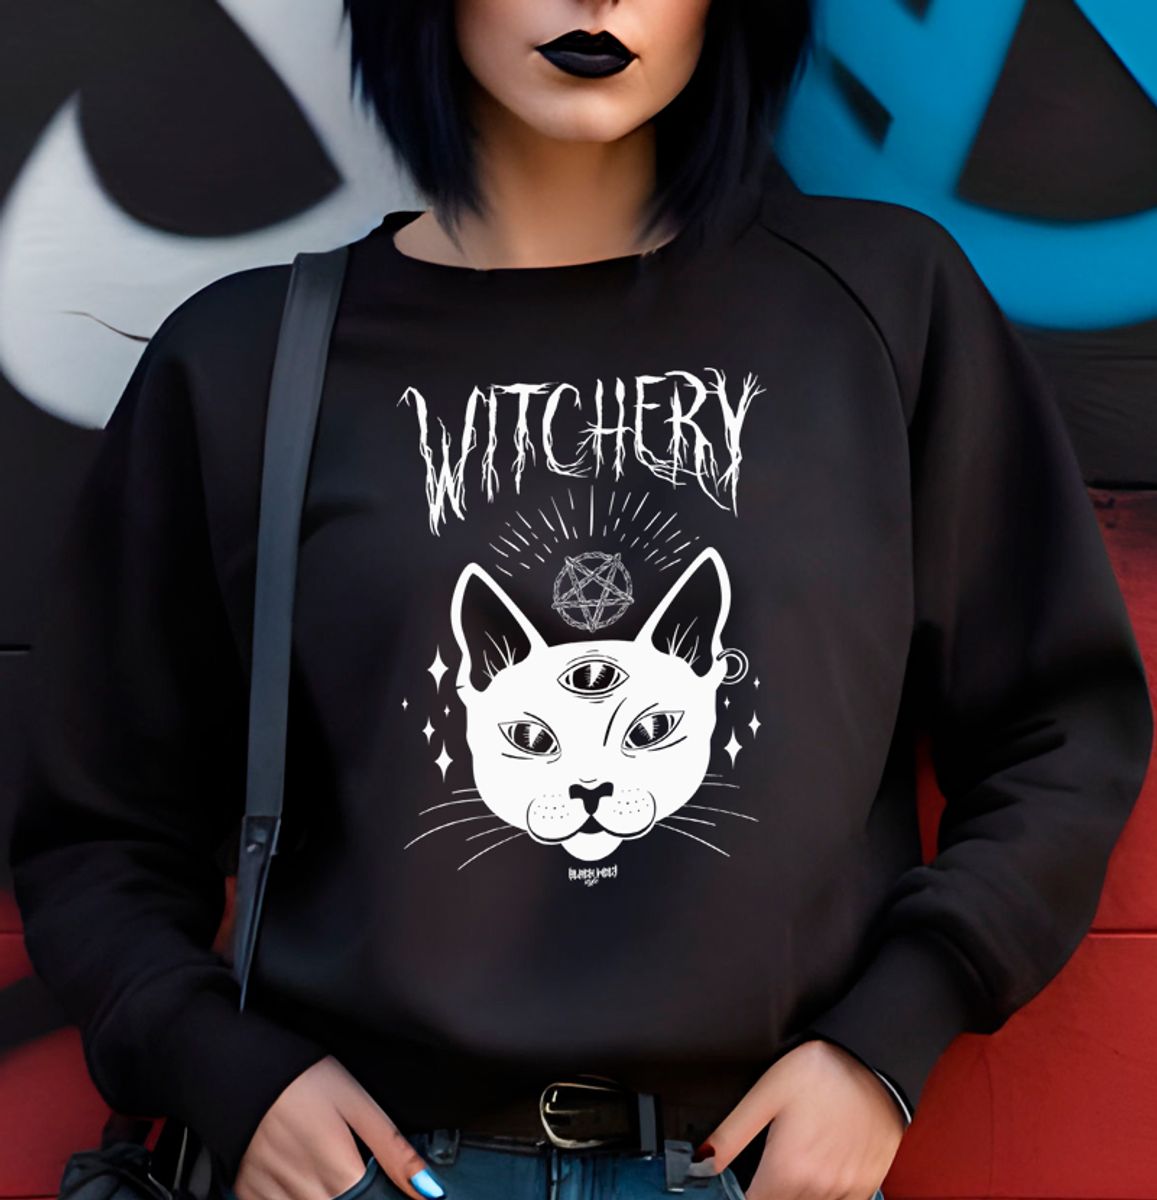 Nome do produto: Witchery